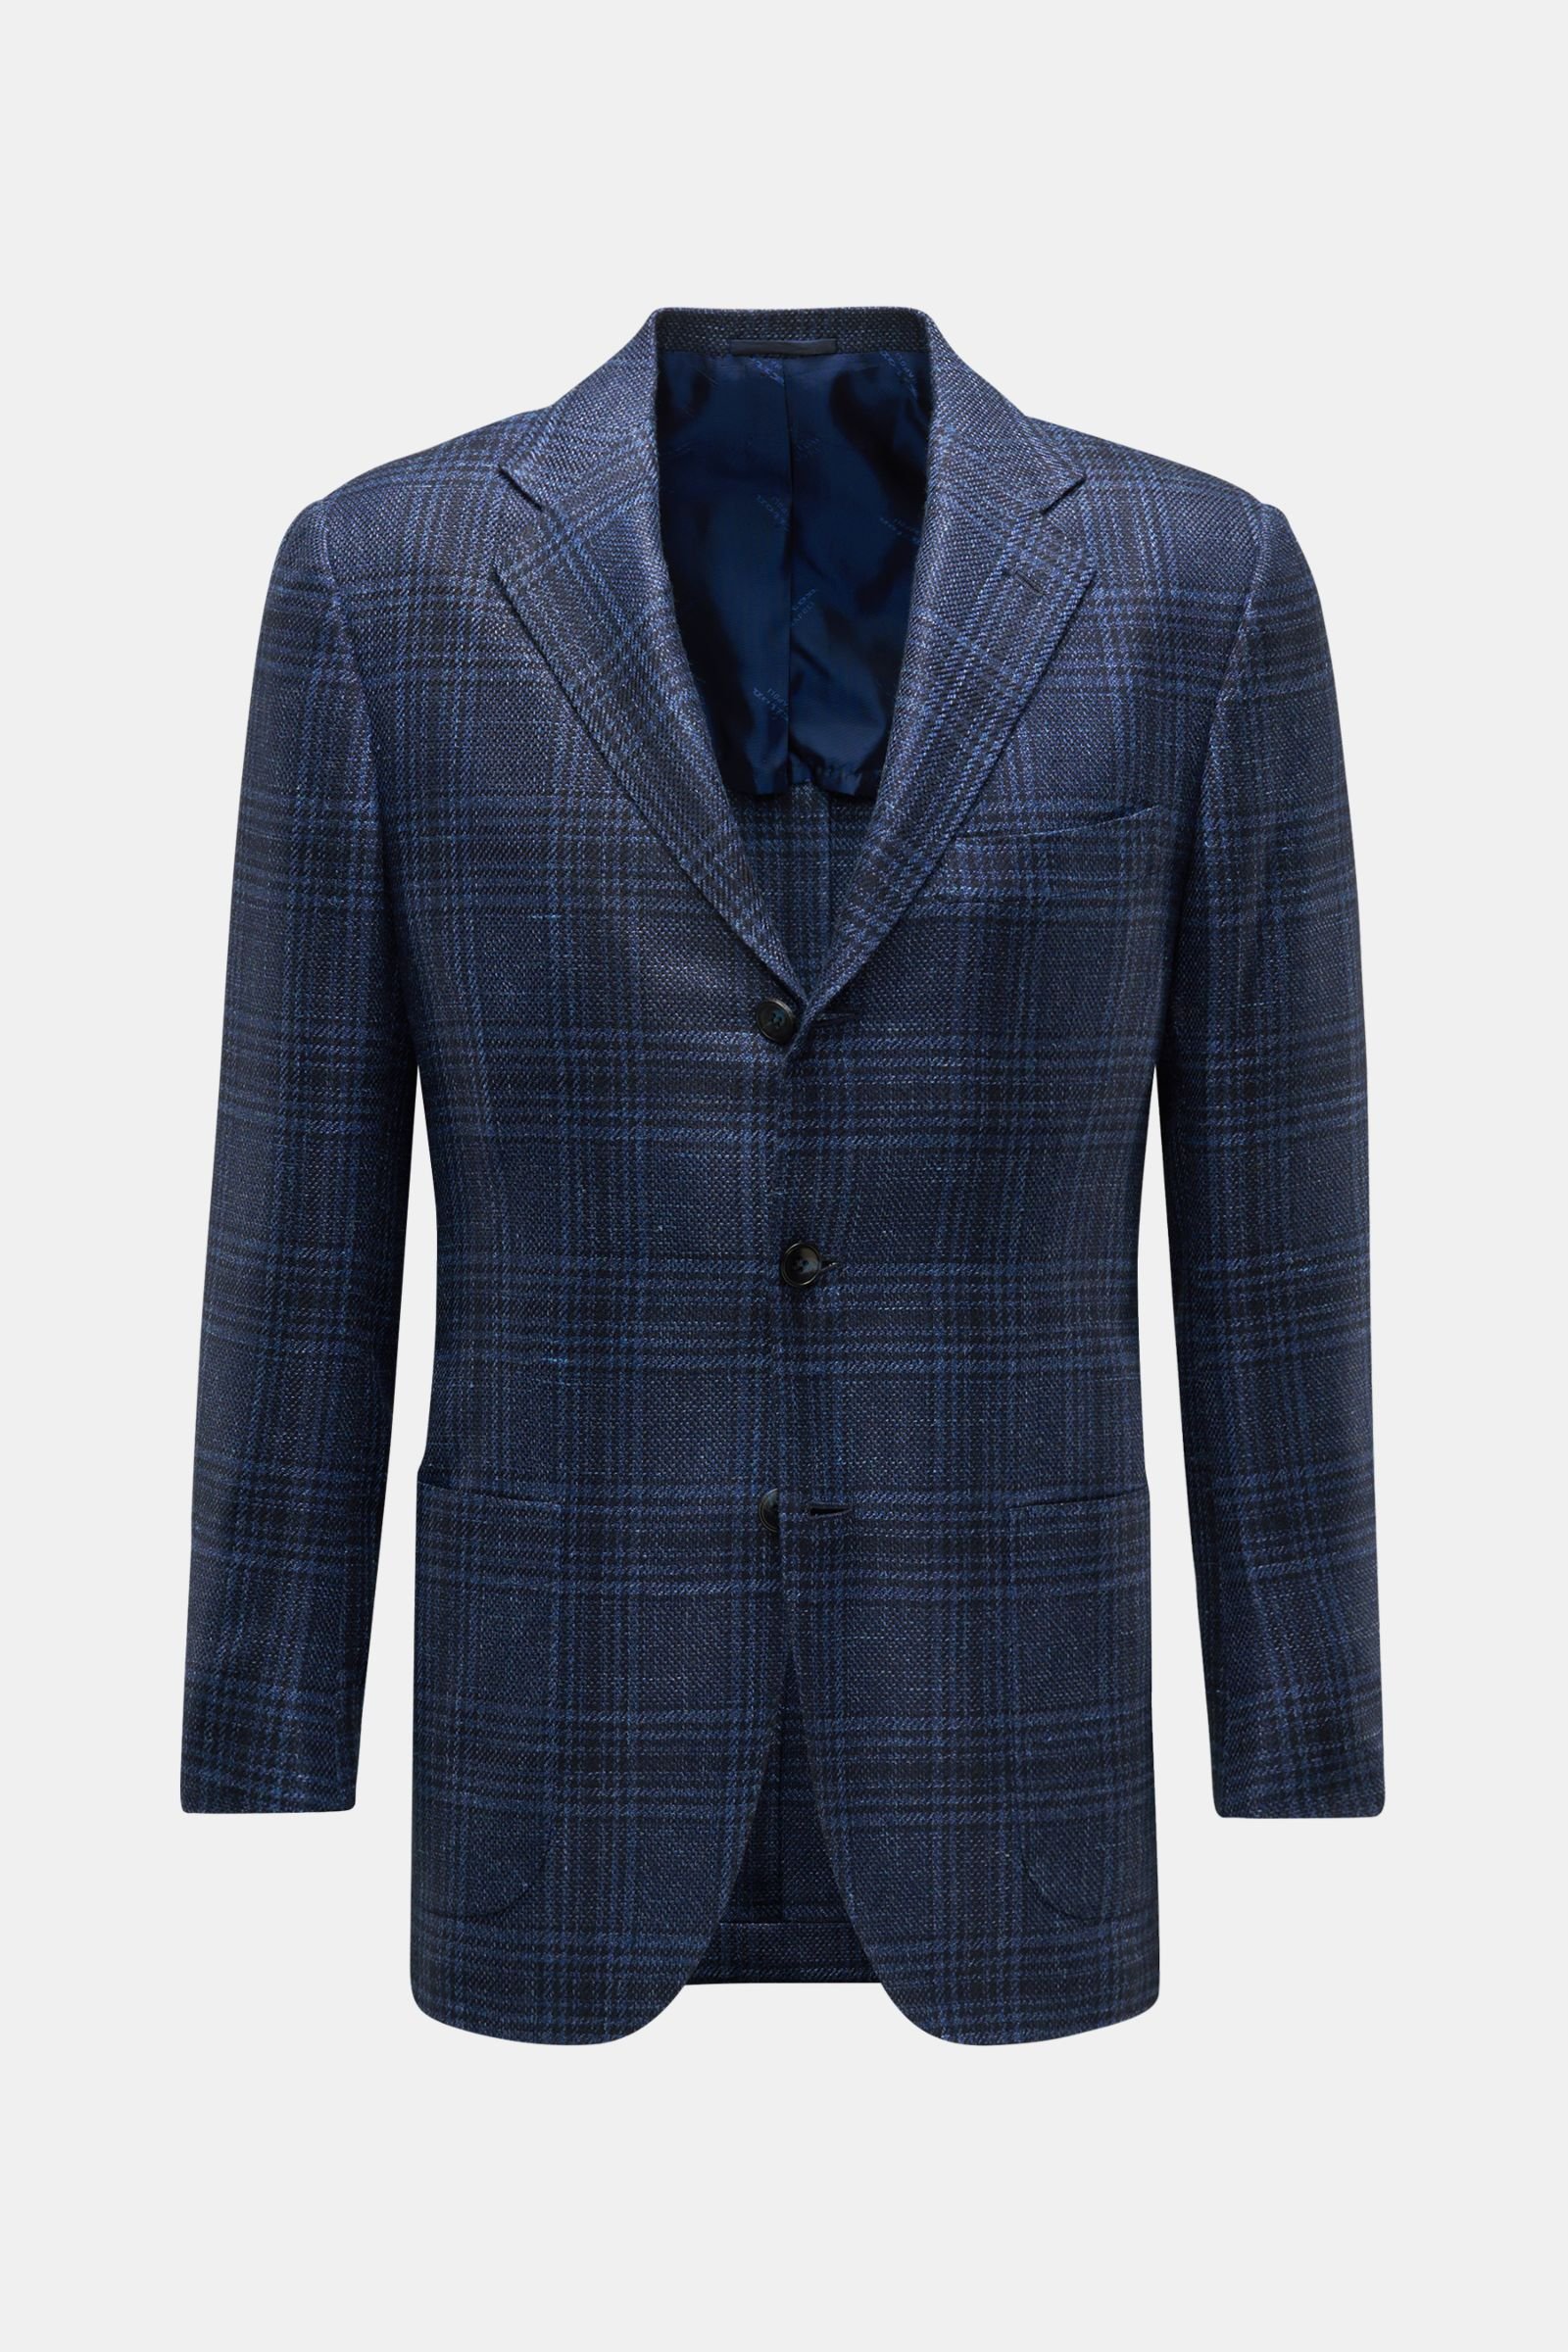 Smart-casual jacket navy/dark blue checked